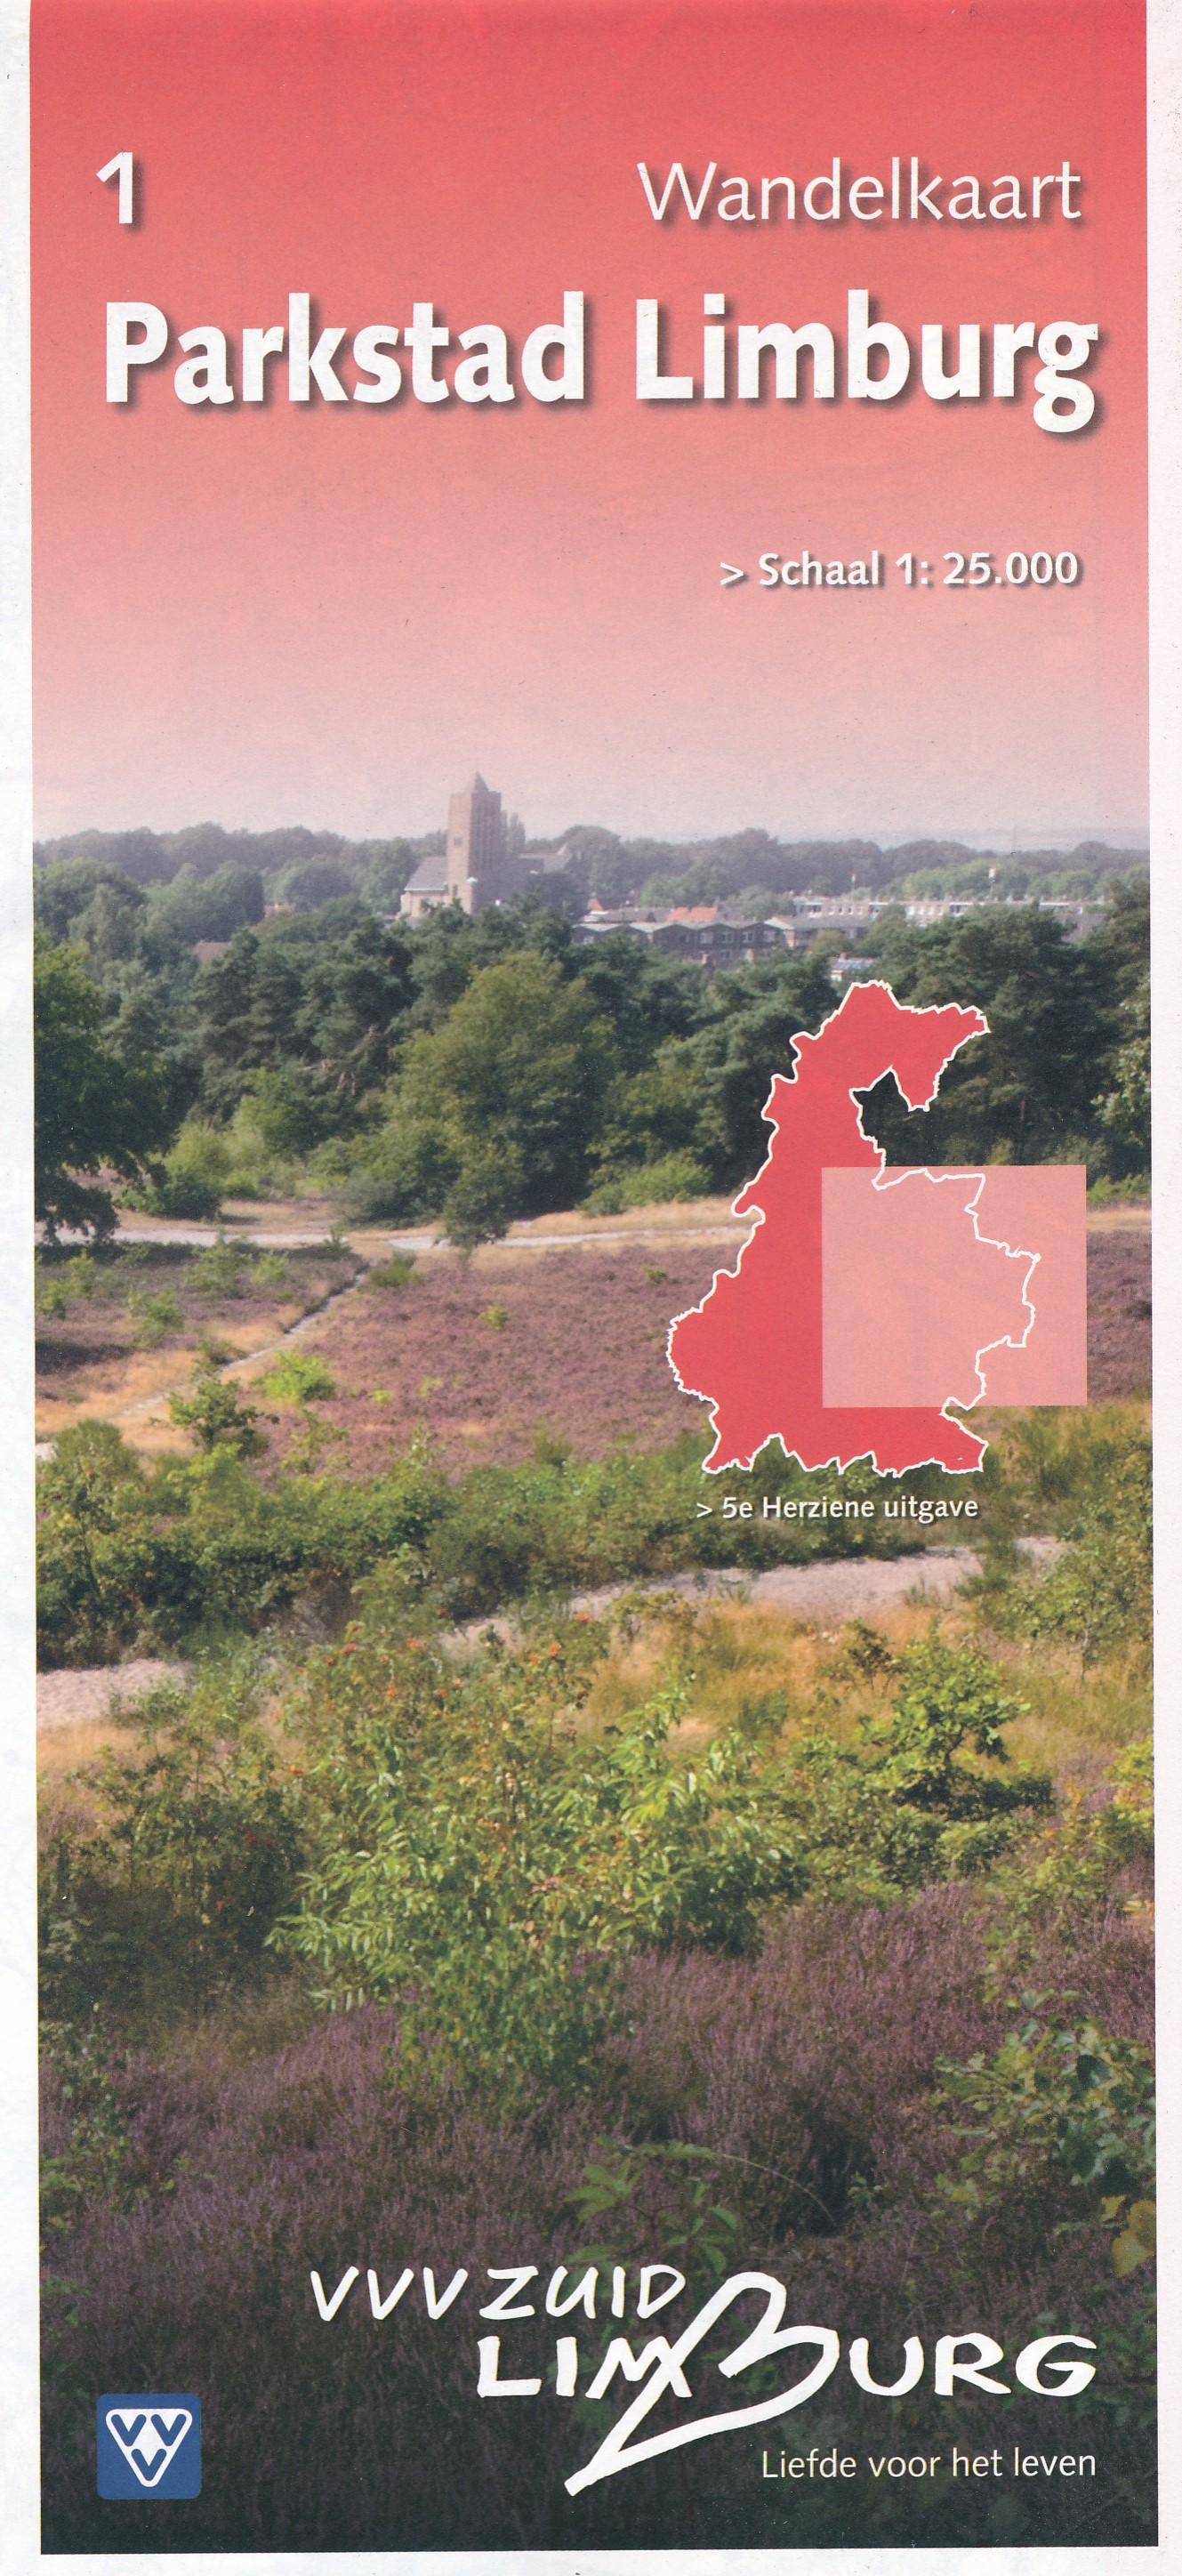 Online bestellen: Wandelkaart - Topografische kaart 1 Parkstad Limburg | VVV Zuid Limburg